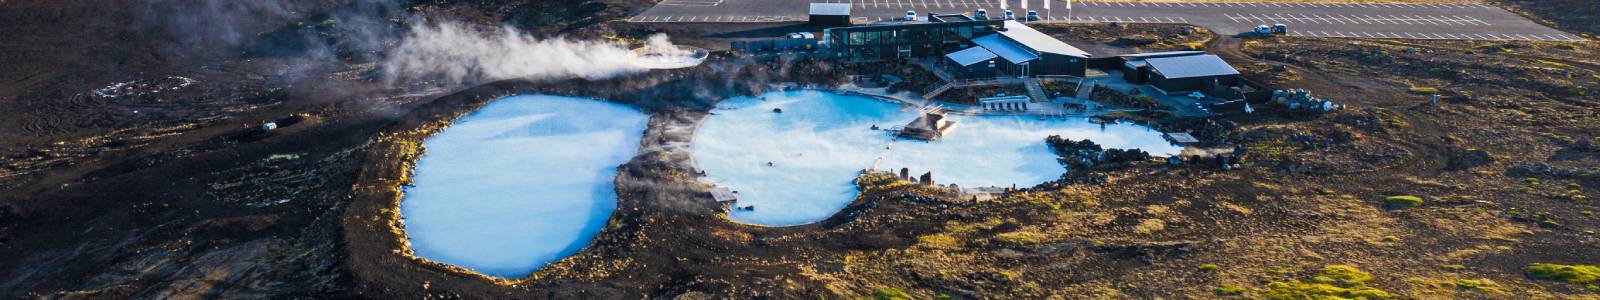 Warmwaterbronnen in IJsland